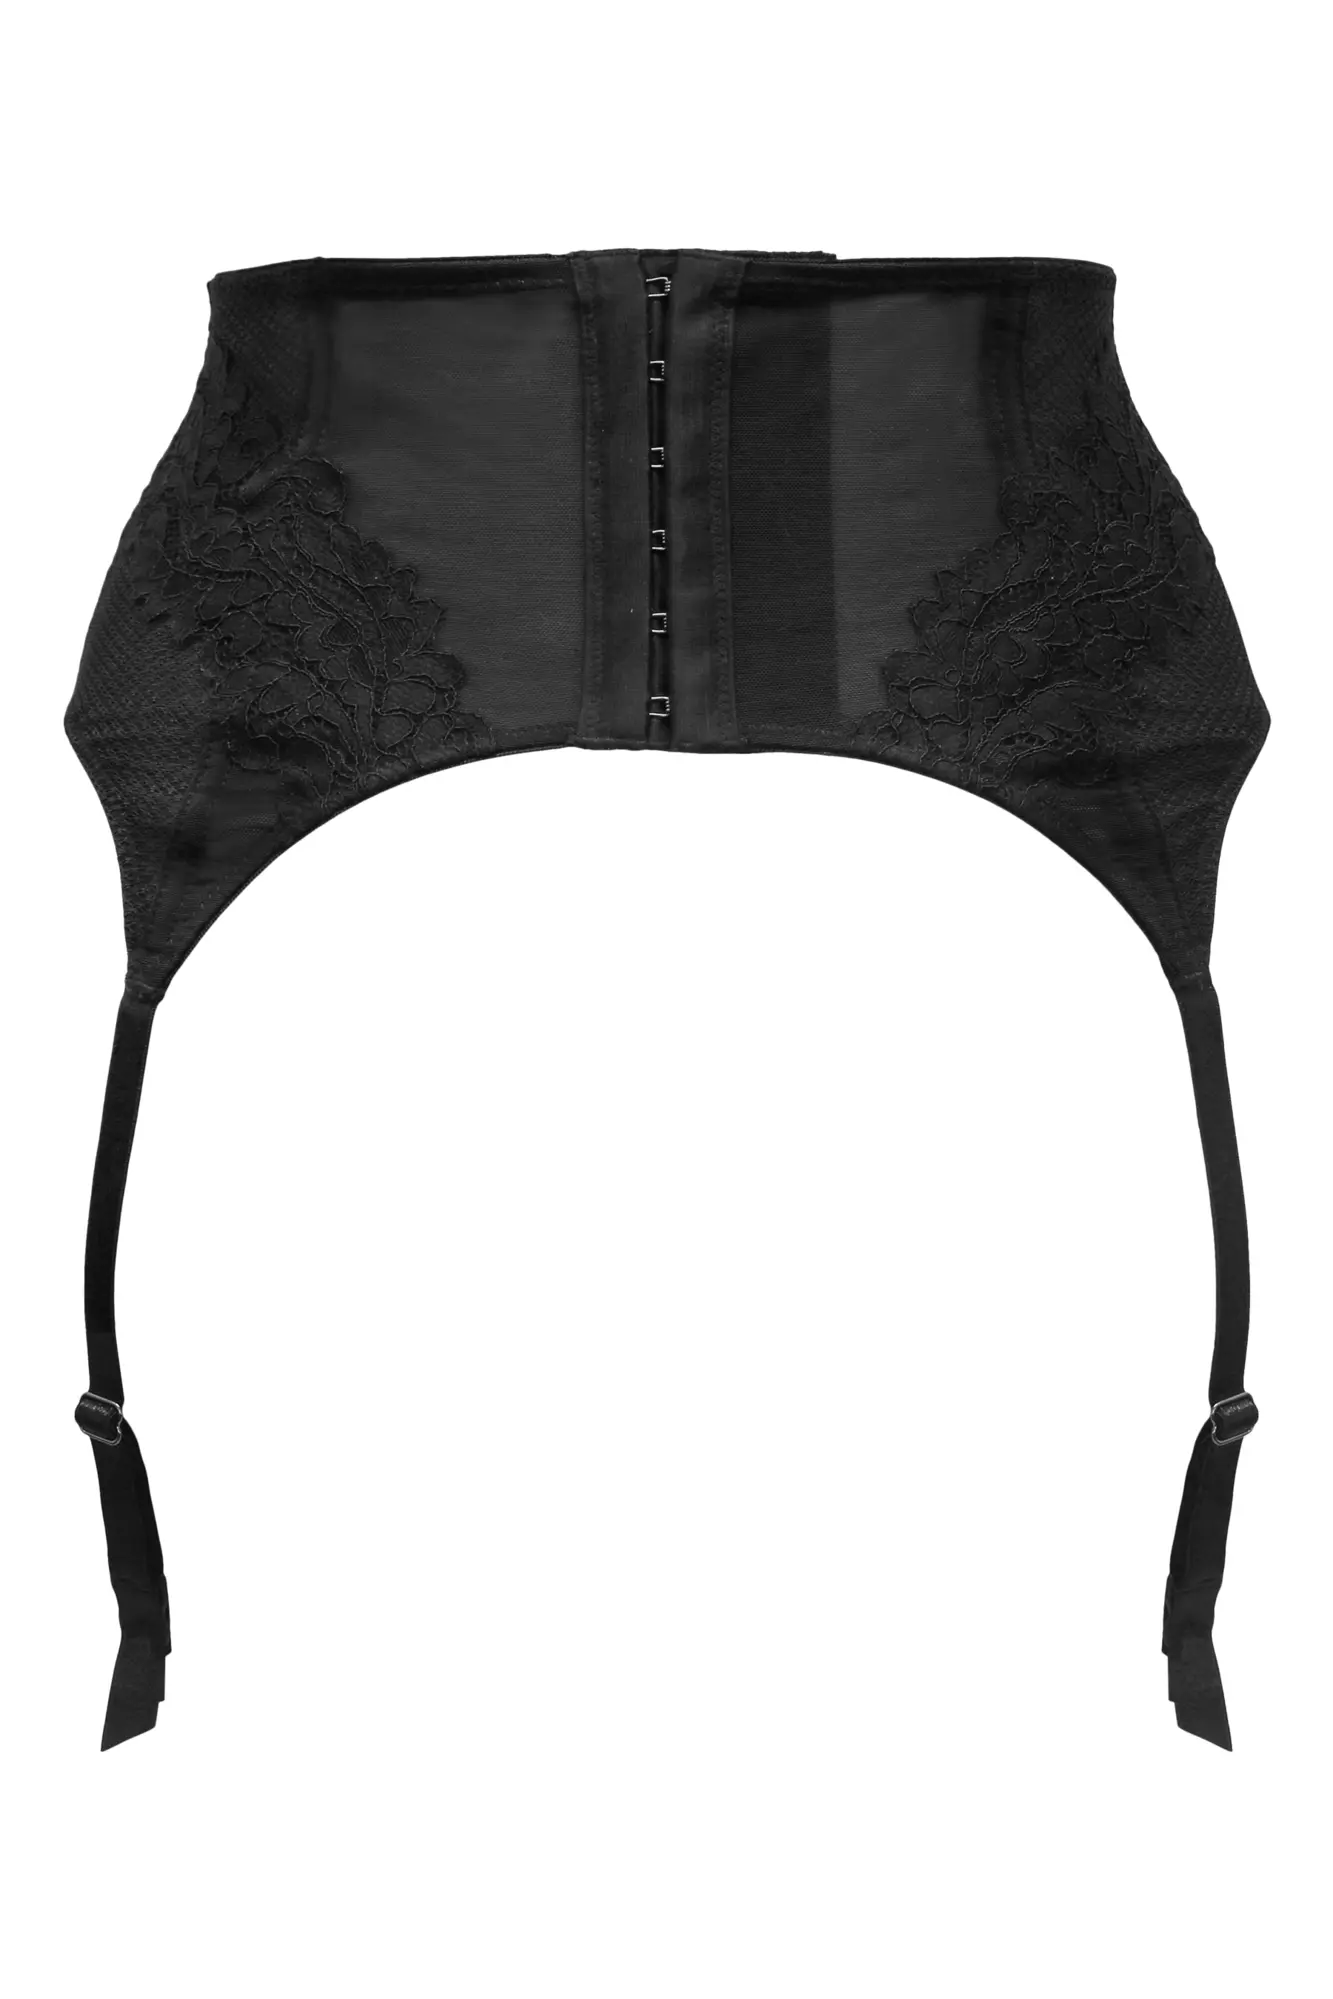 Sexy Black Lace Strapless Bra & Garter Set (36B) High Waisted